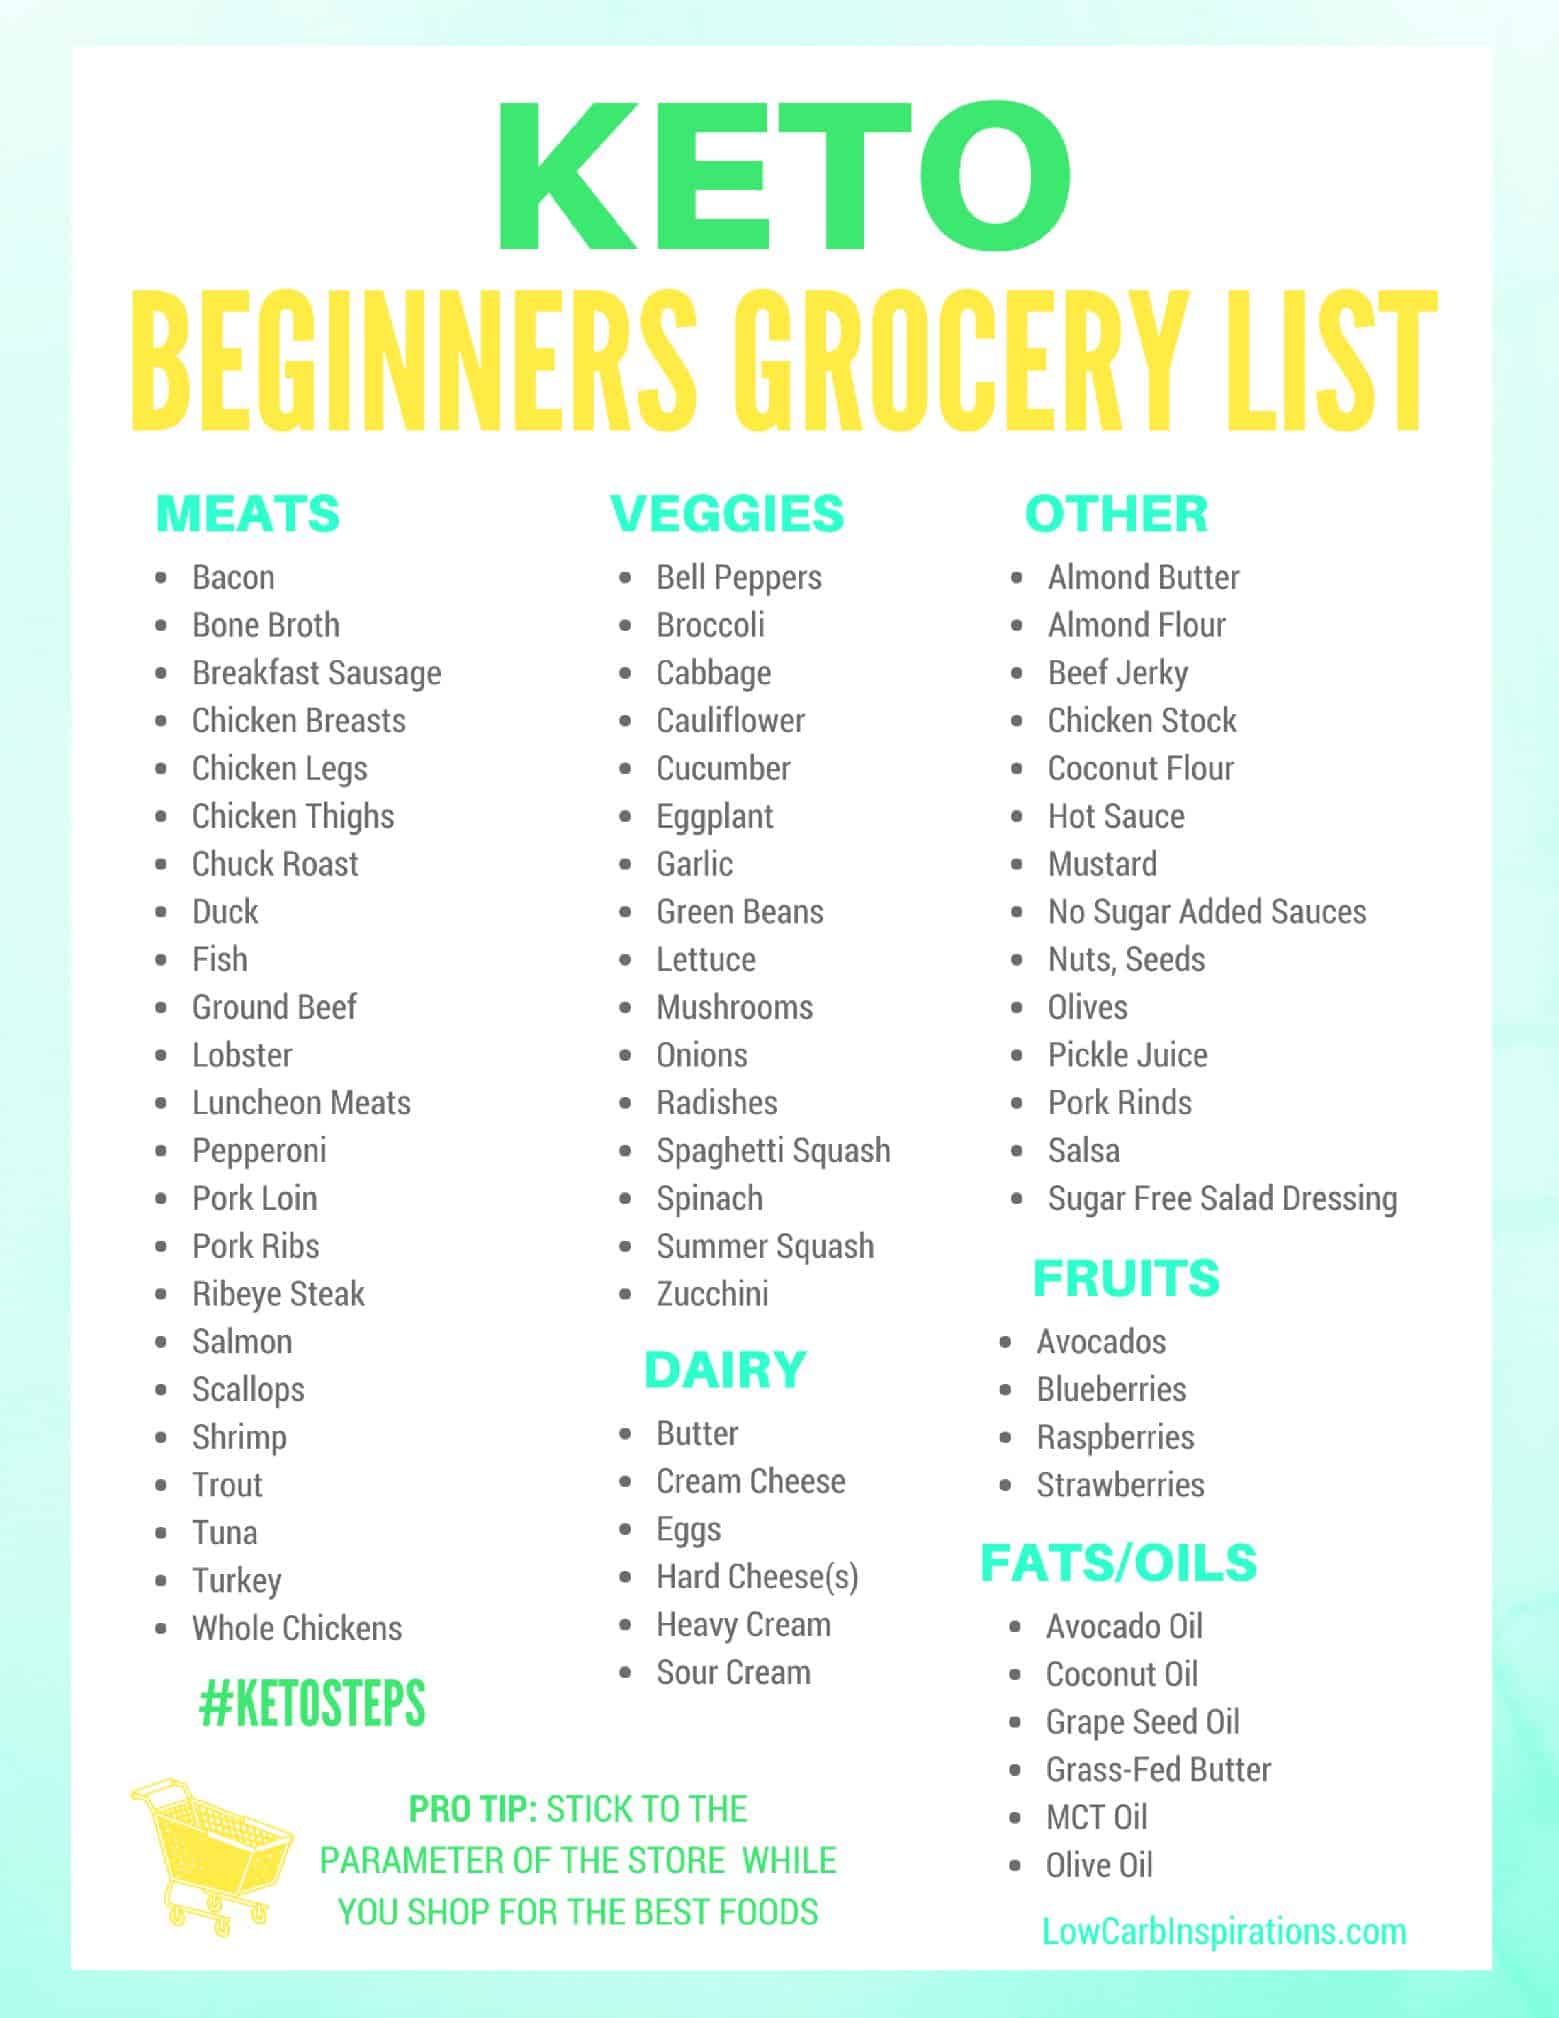 Keto Grocery List for Beginners iSaveA2Z com